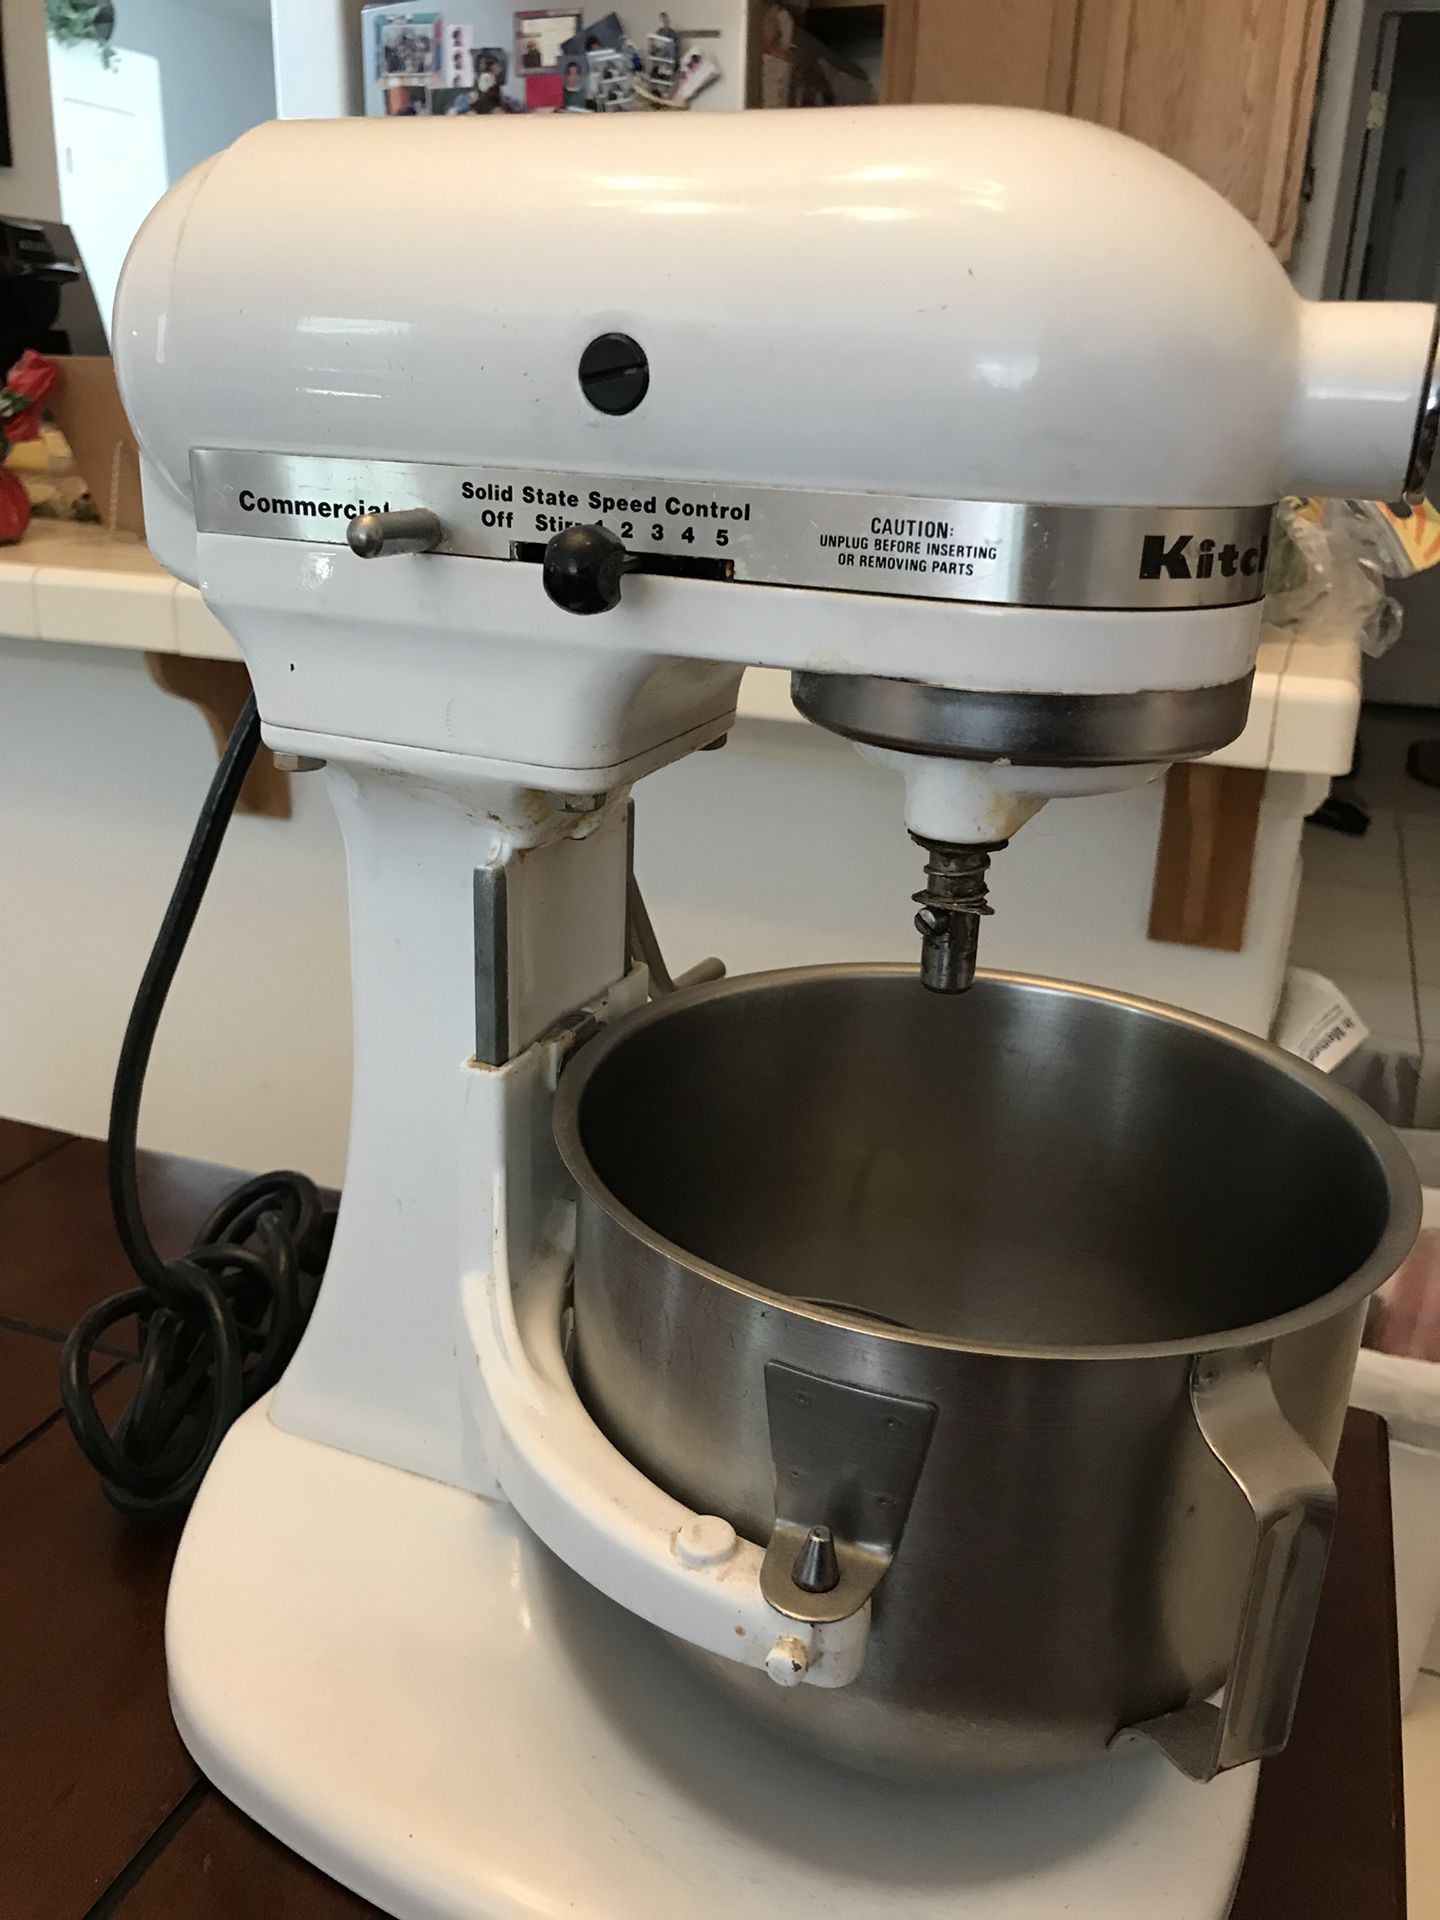 KitchenAid KSMC50 - Commercial Mixer 